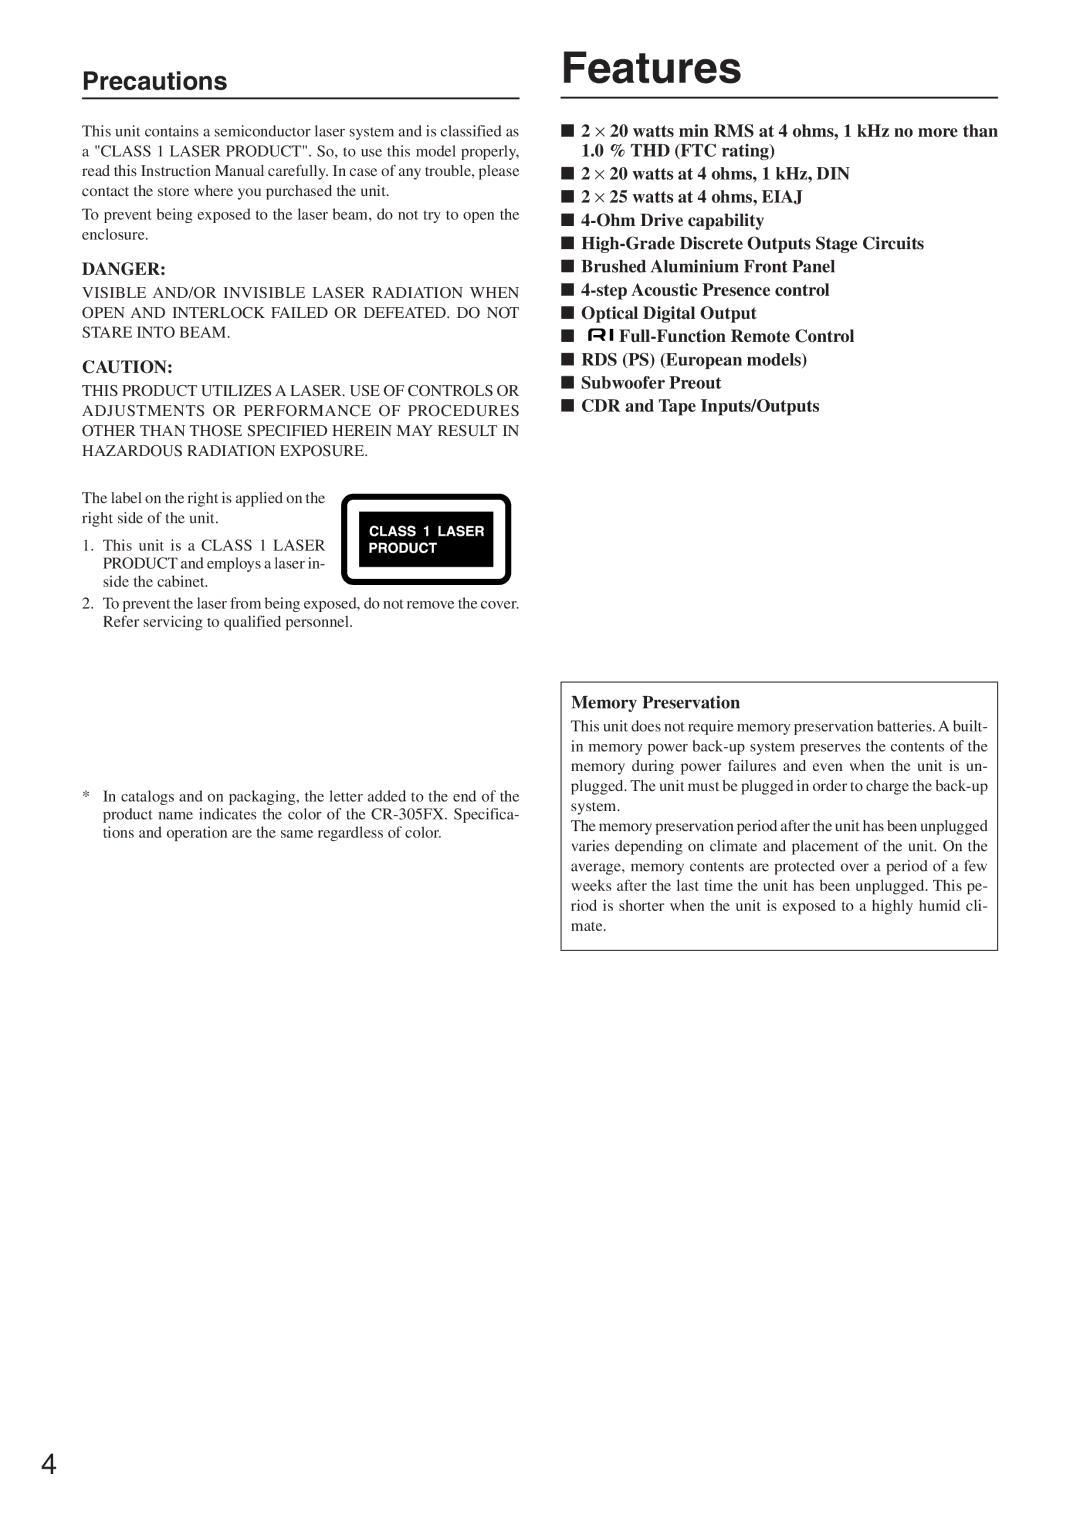 Onkyo CR-305FX instruction manual Features, Precautions 